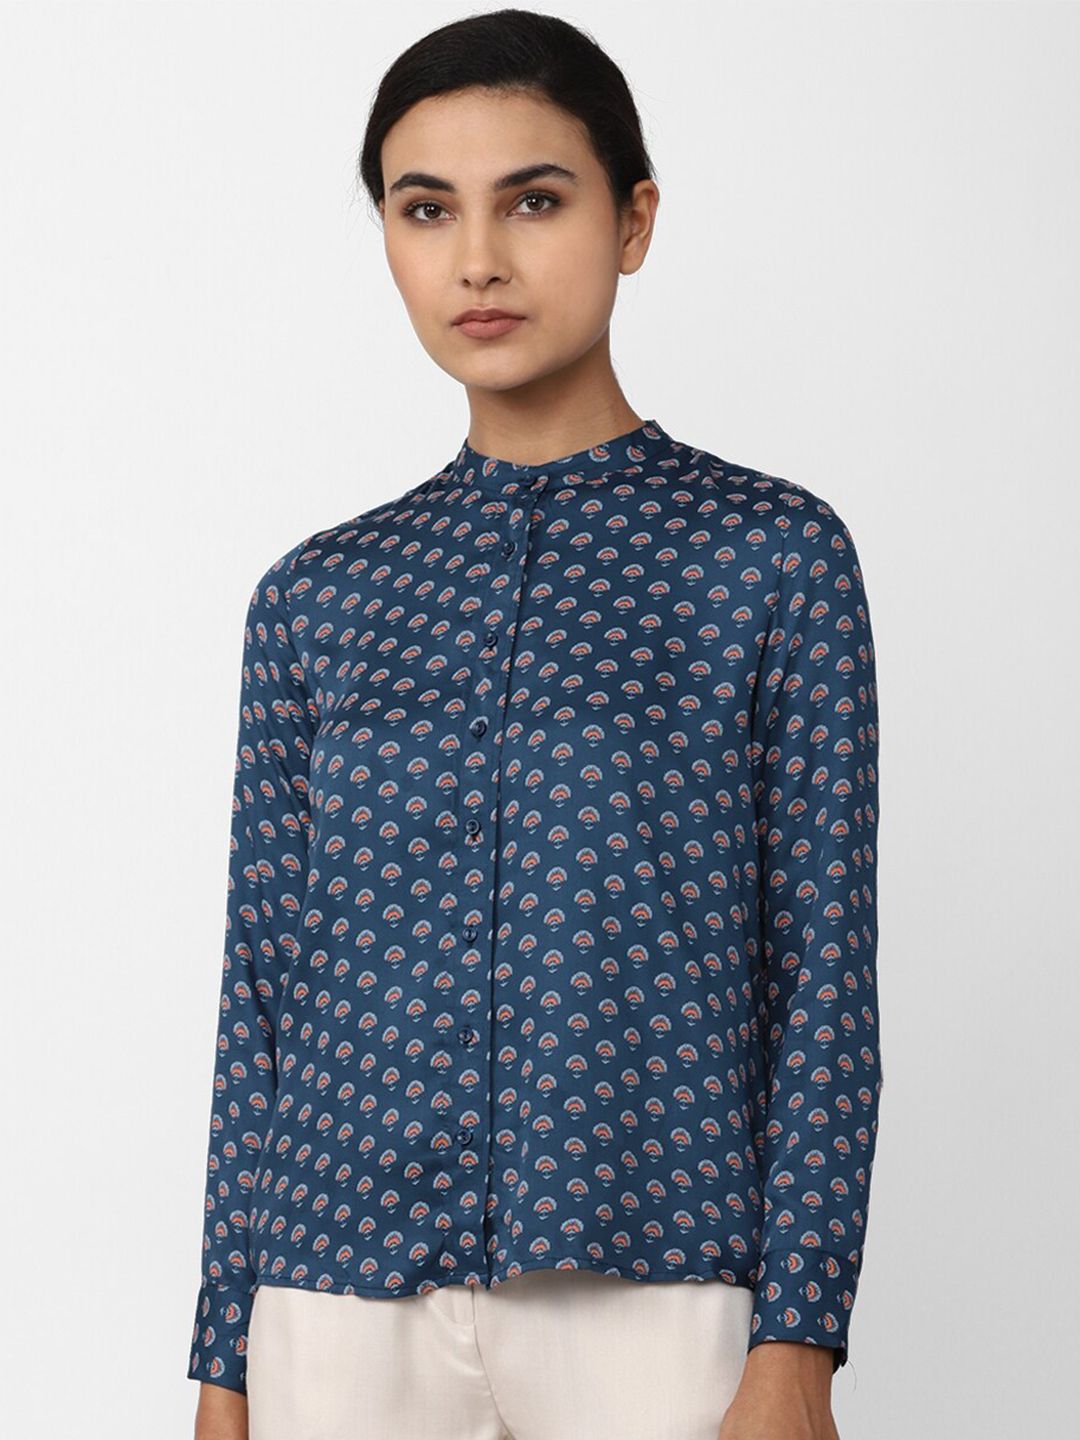 Van Heusen Print Mandarin Collar Shirt Style Top Price in India